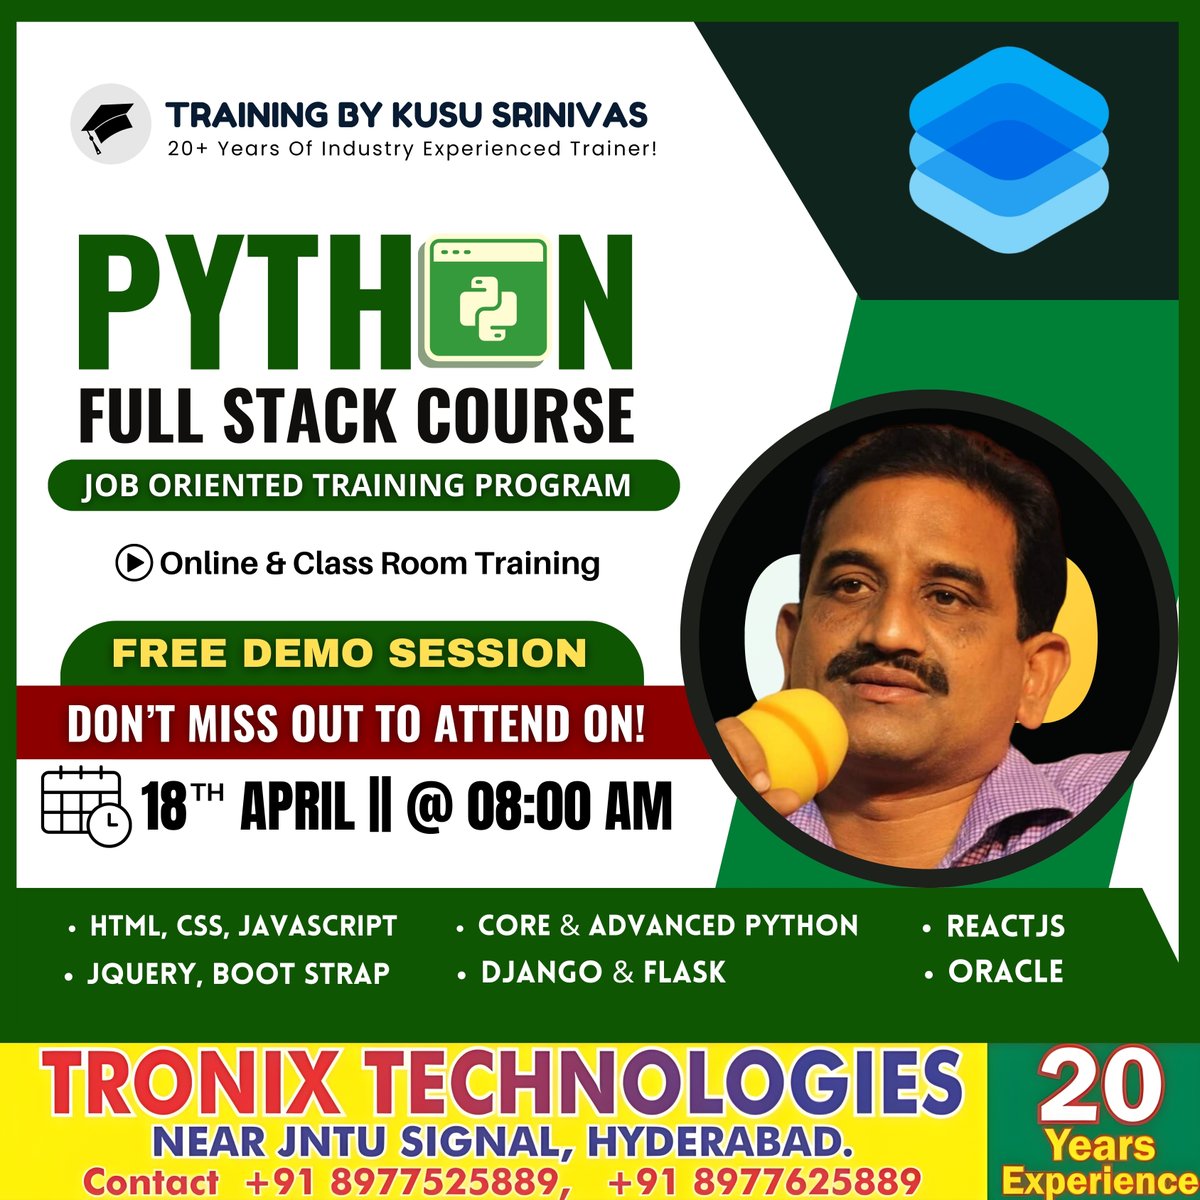 Don't Miss Out this Opportunity!
#python #pythonprogramming #pythonfullstack #pythontraining #pythontraininginstitute #pythoncourse #pythonlearning #django #pythonfullstackcourse #tronixtechnologies #javascript #java #javafullstackcourse #javatraining #Javatraininginstitute